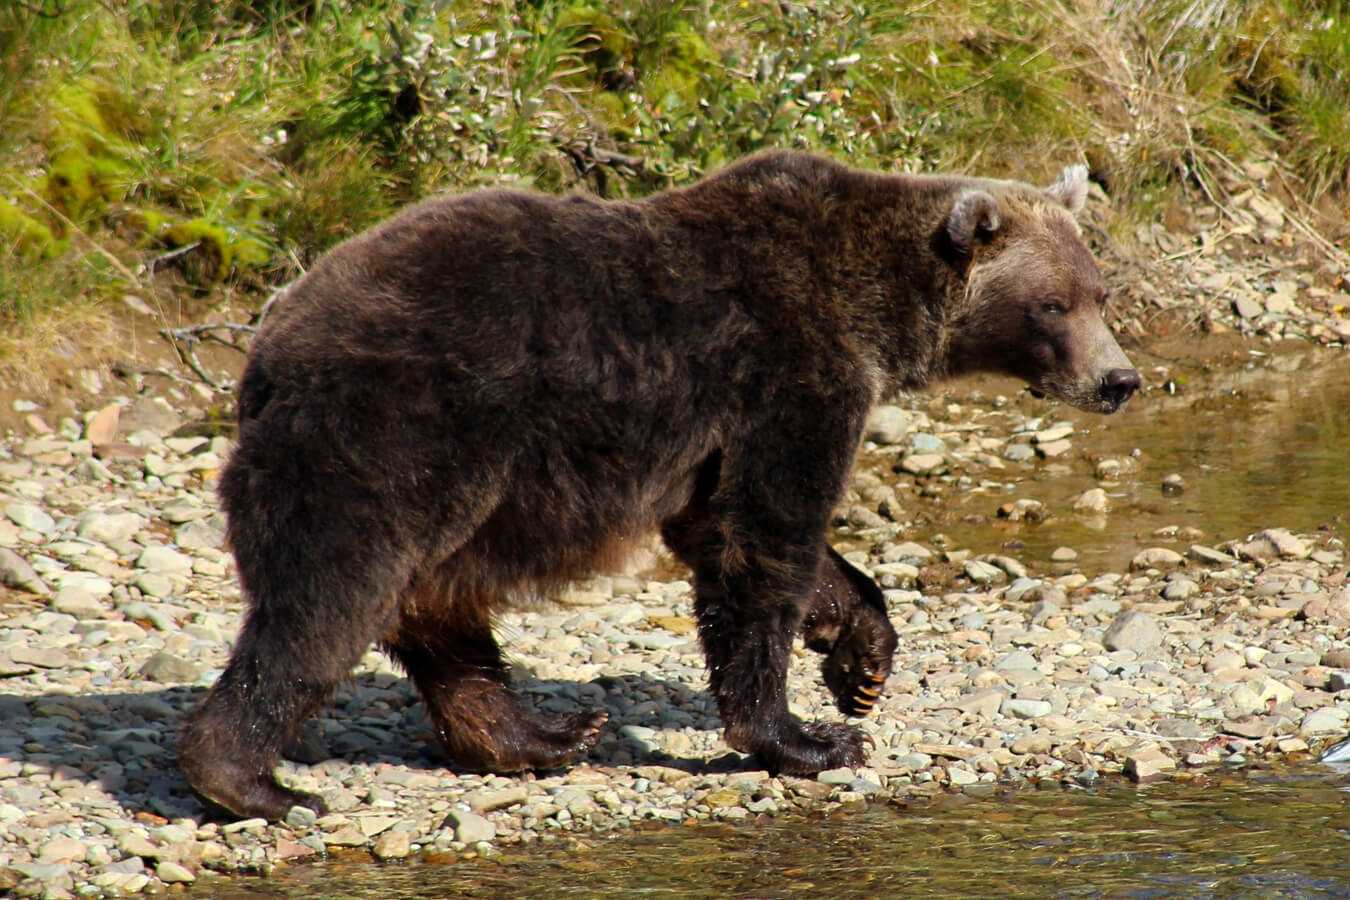 Grizzly Bear on a River Bank, Lake Clark National Park, Alaska | Photo Credit: Shutterstock / jet 67